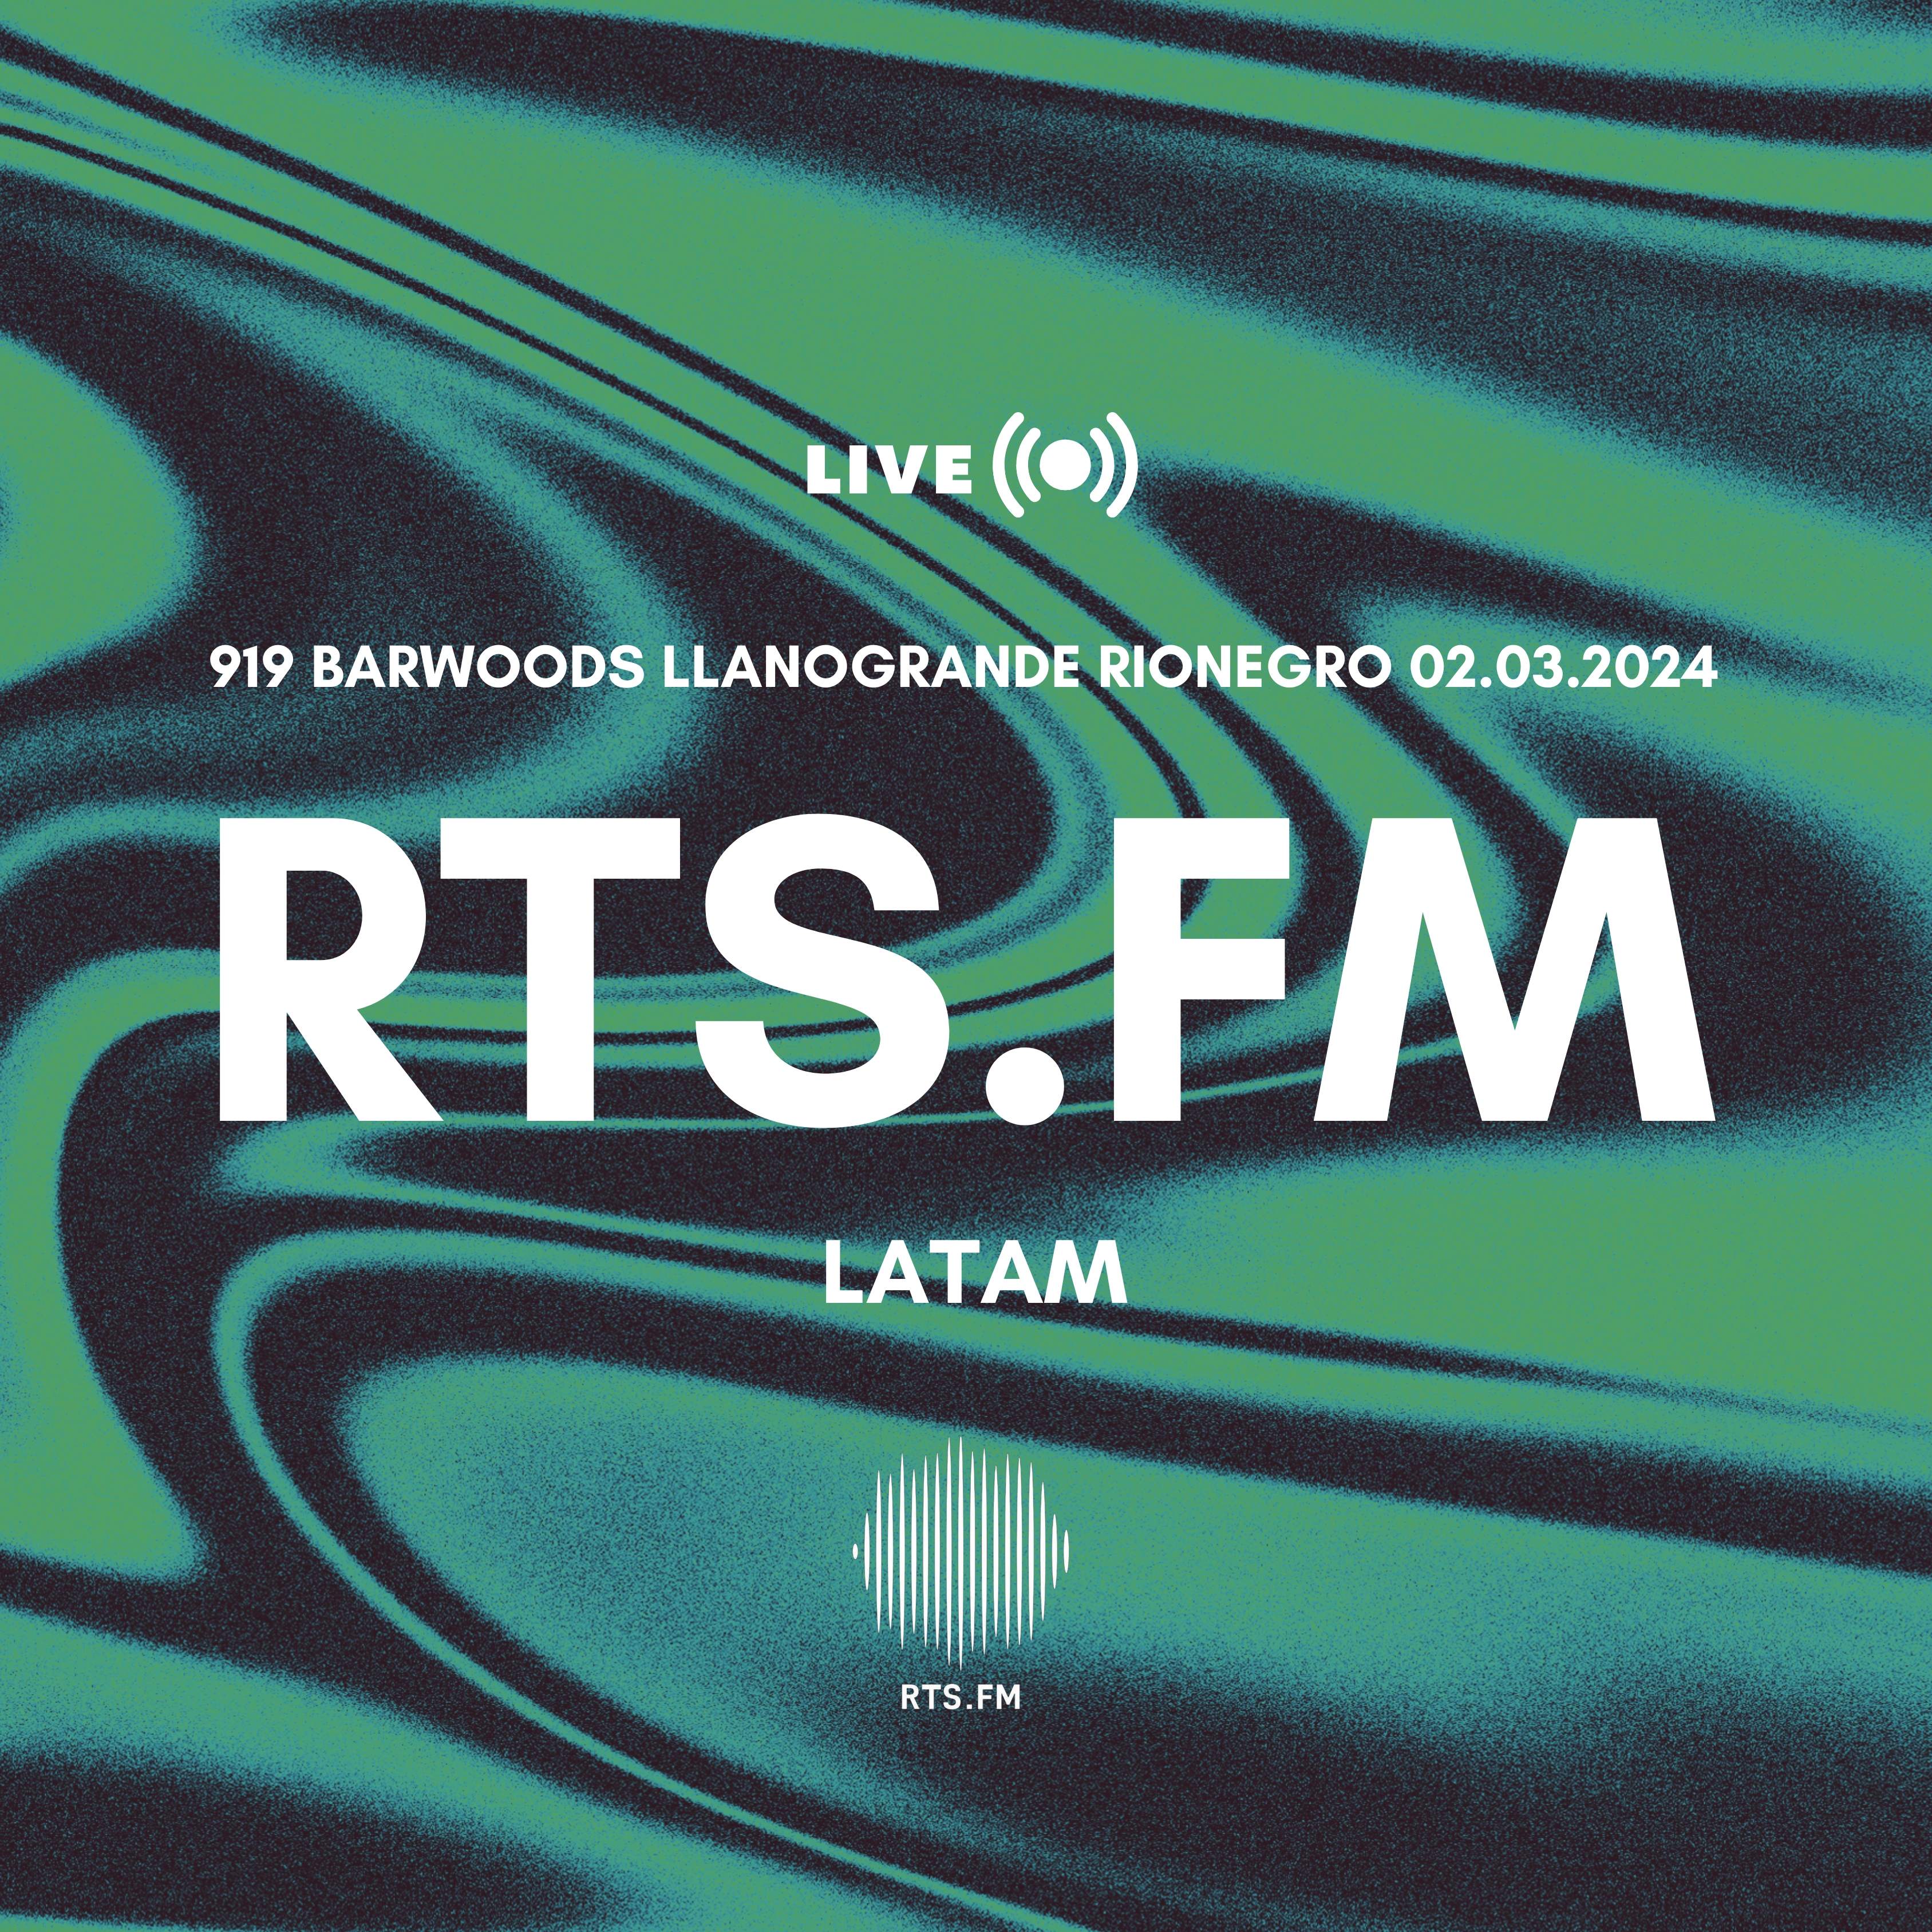 RTS.FM LIVE 919 BAR LLANOGRANDE RIONEGRO - フライヤー表